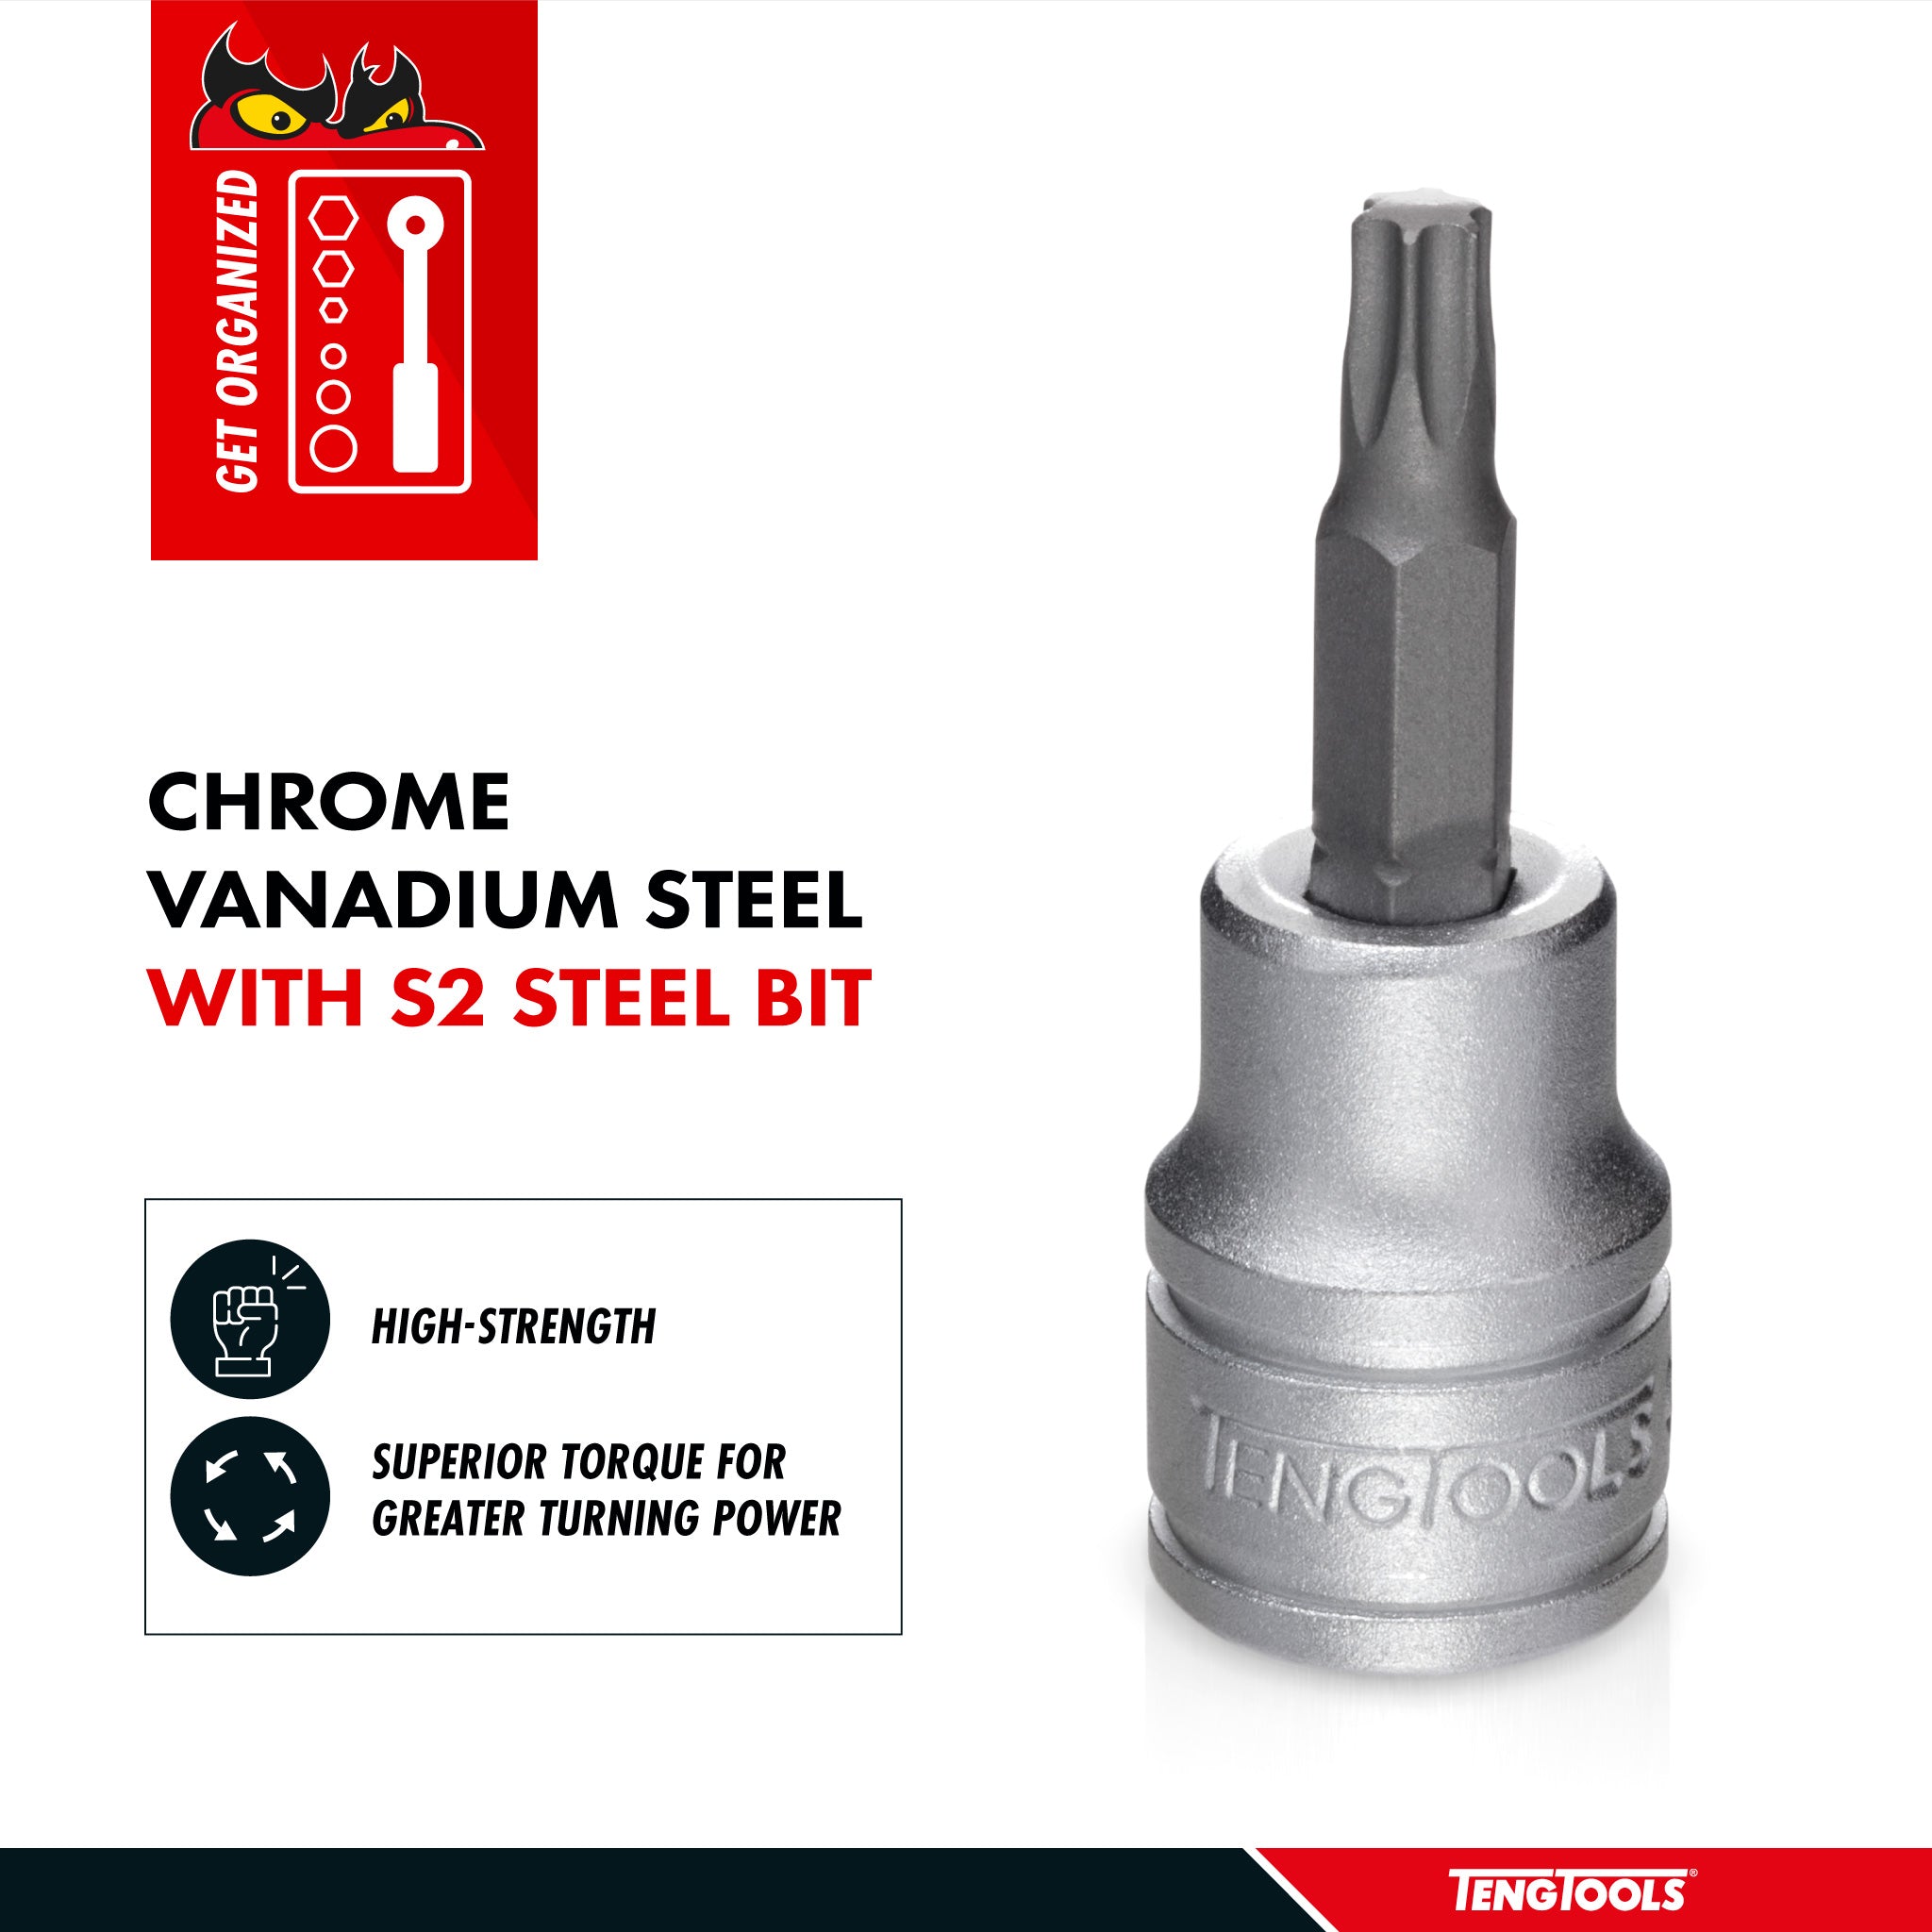 Teng Tools 1/4 Inch Drive Metric Torx TX Chrome Vanadium Sockets - TX15